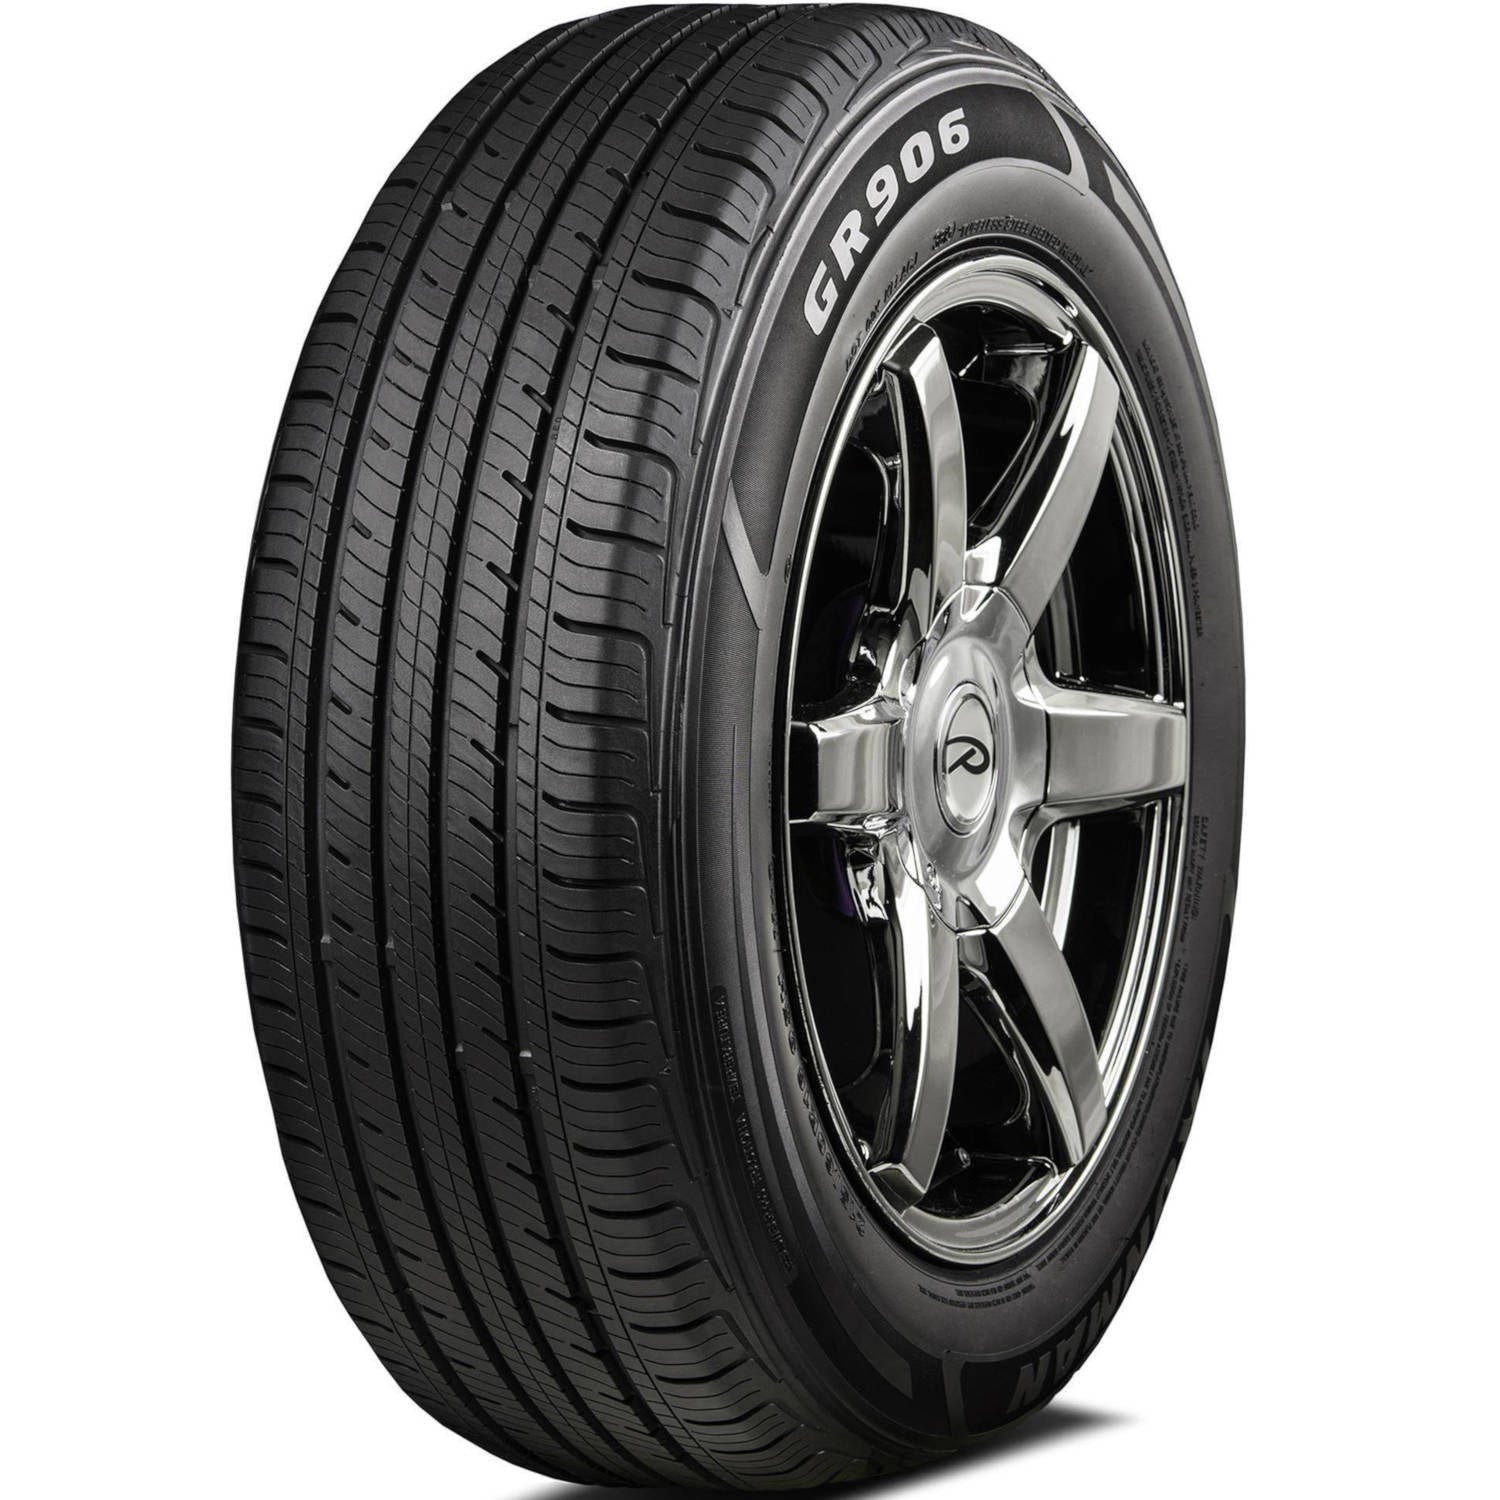 IRONMAN GR906 205/65R15 (25.5X8.1R 15) Tires